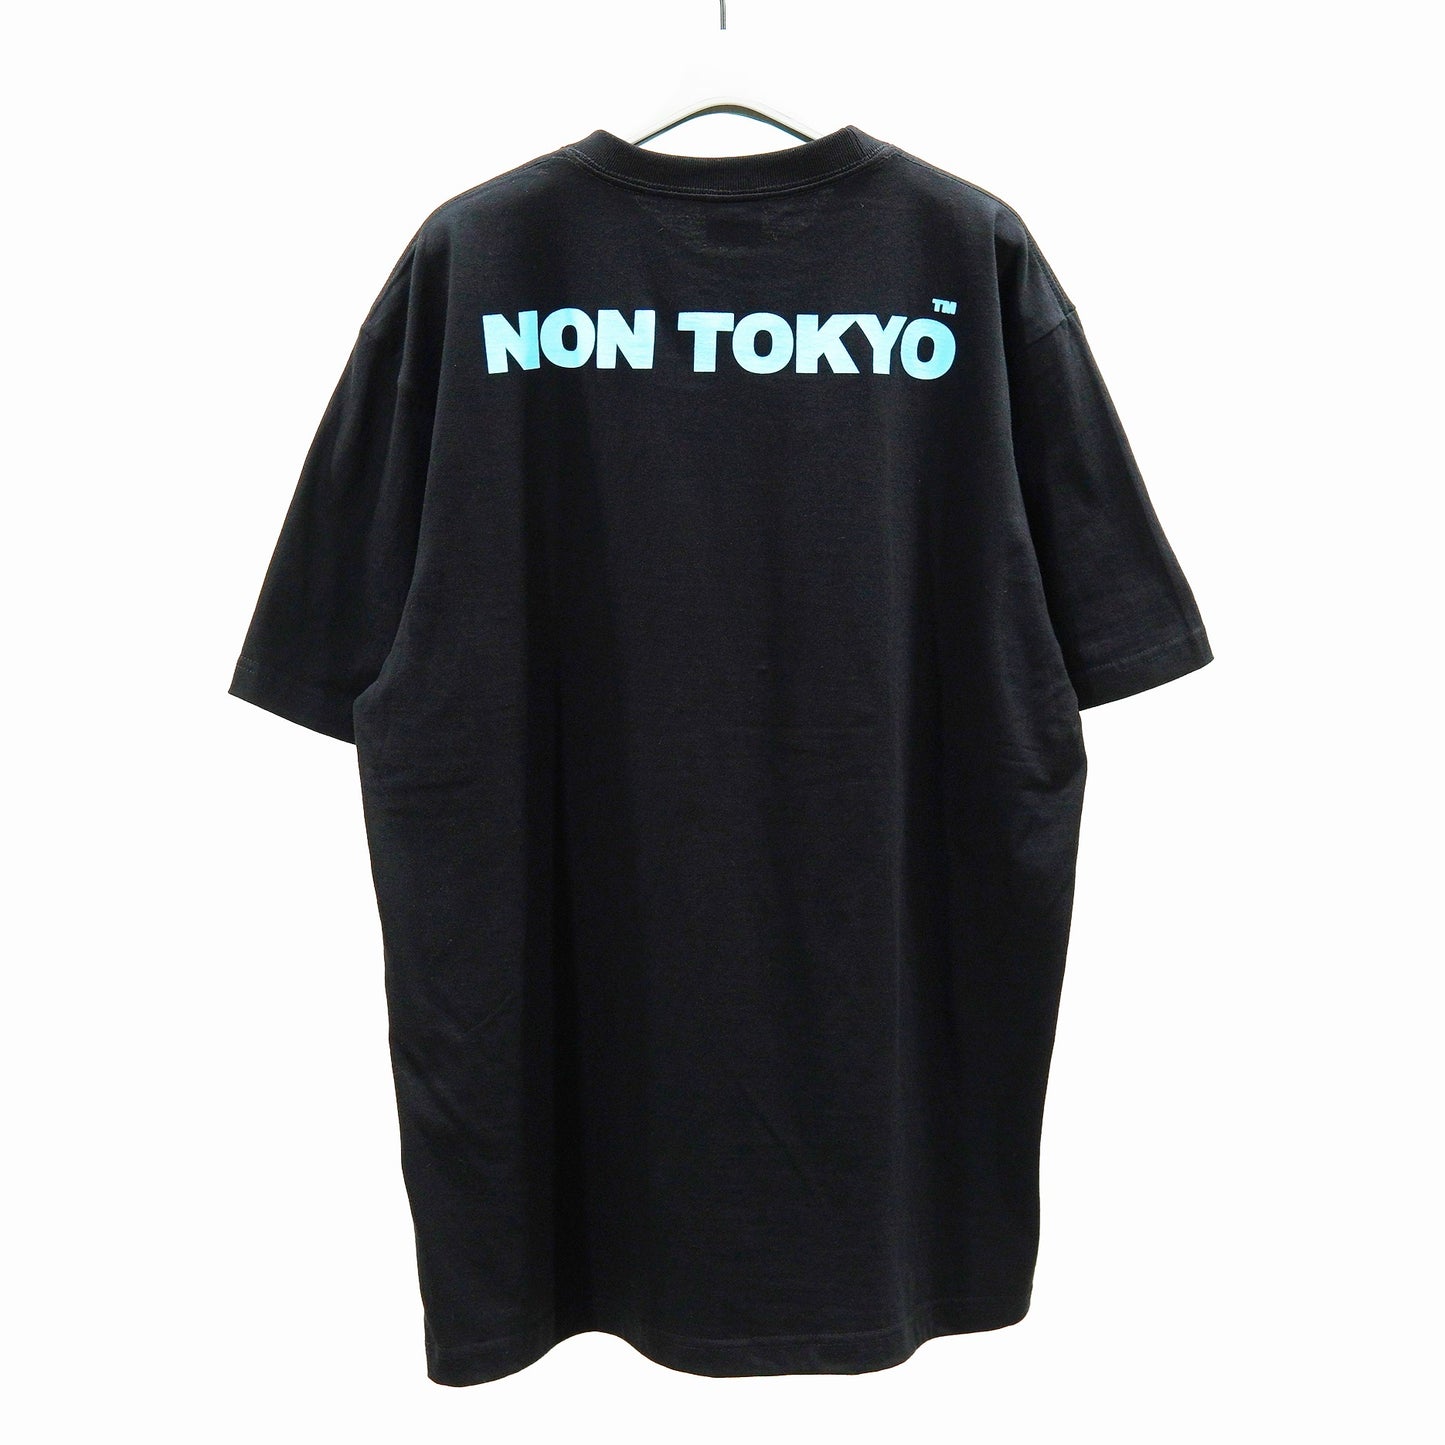 NON TOKYO / PRINT T-SHIRT(princess knight.C / BLACK) / 〈ノントーキョー〉プリントTシャツ (リボンの騎士C / ブラック)